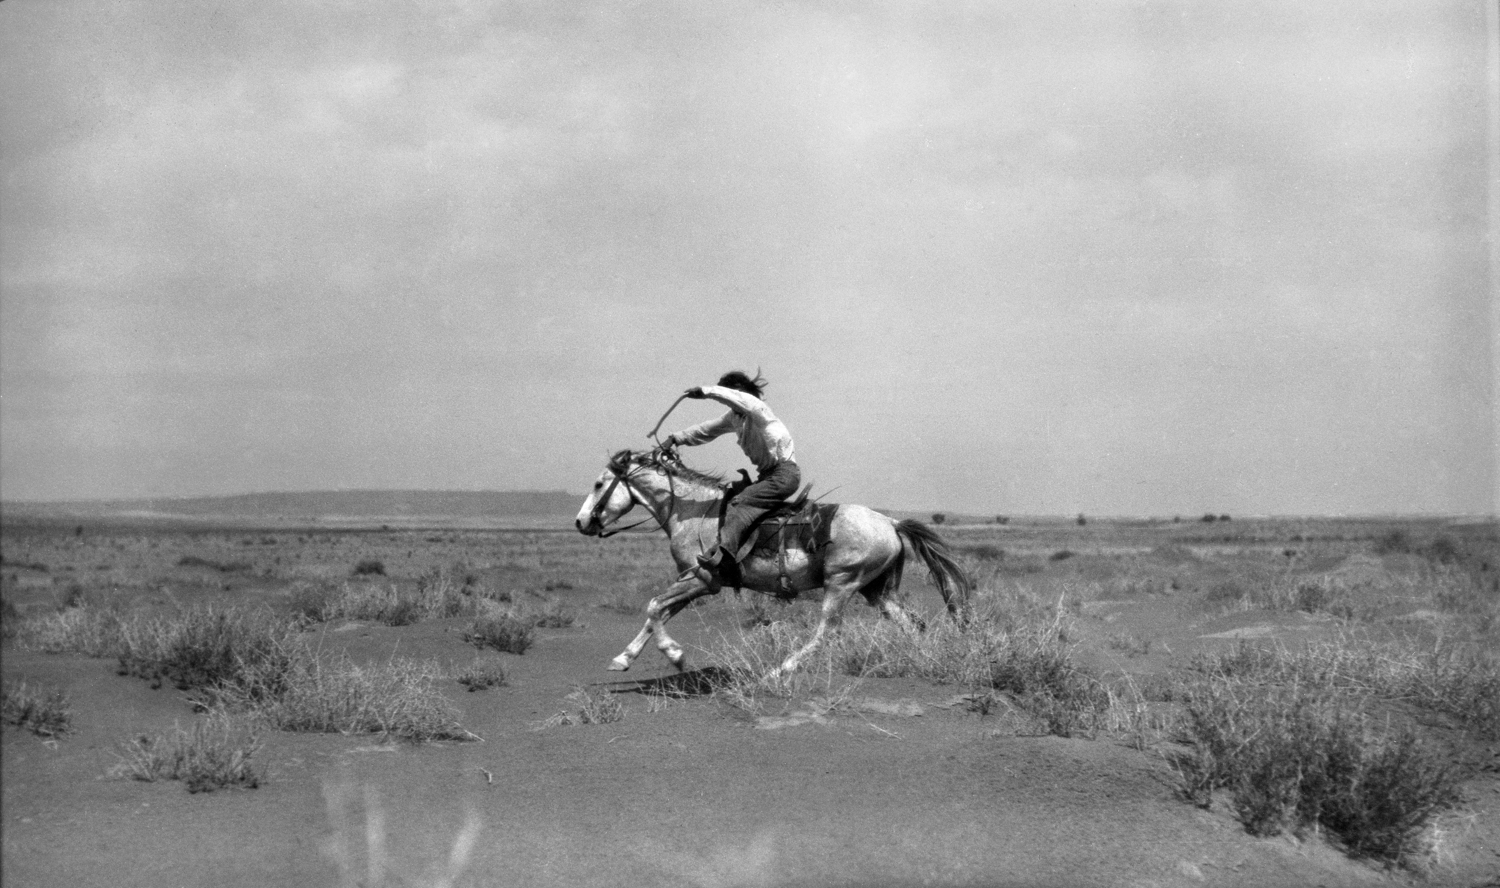 Hopi Boy Racing Horse, Hopi Reservation, Arizona, July 8, 1908. Photograph by Joseph Dixon. Courtesy of the Mathers Museum of World Cultures, Wanamaker Collection, Indiana University, Bloomington, I.N., W-5687.